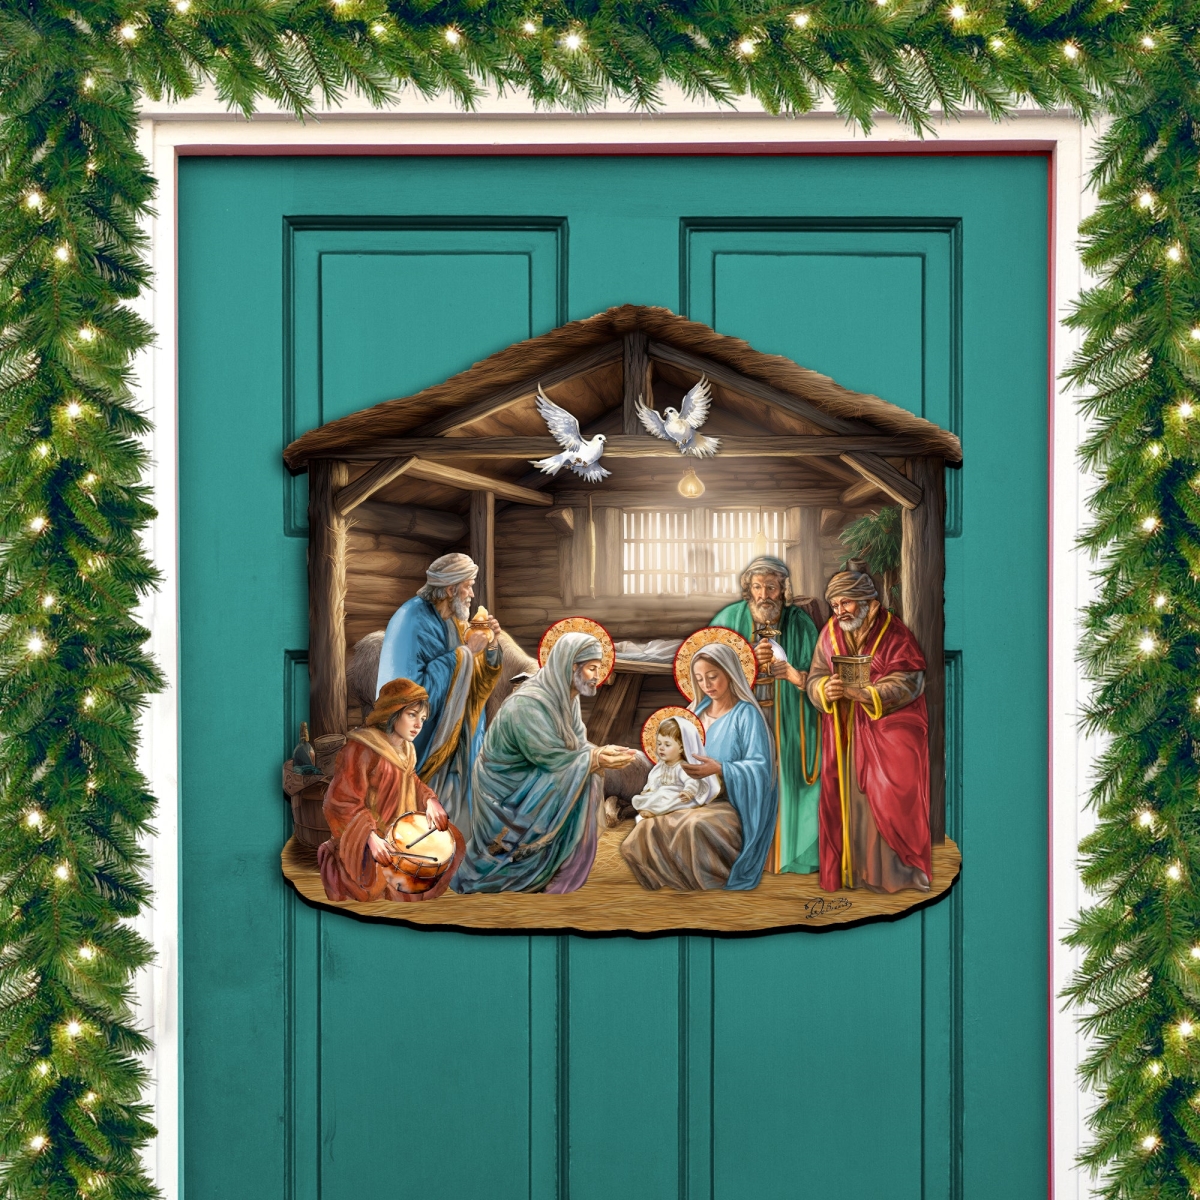 Designocracy 8652763H 24 x 18 in. Nativity Scene Nativity Holiday Door Decor